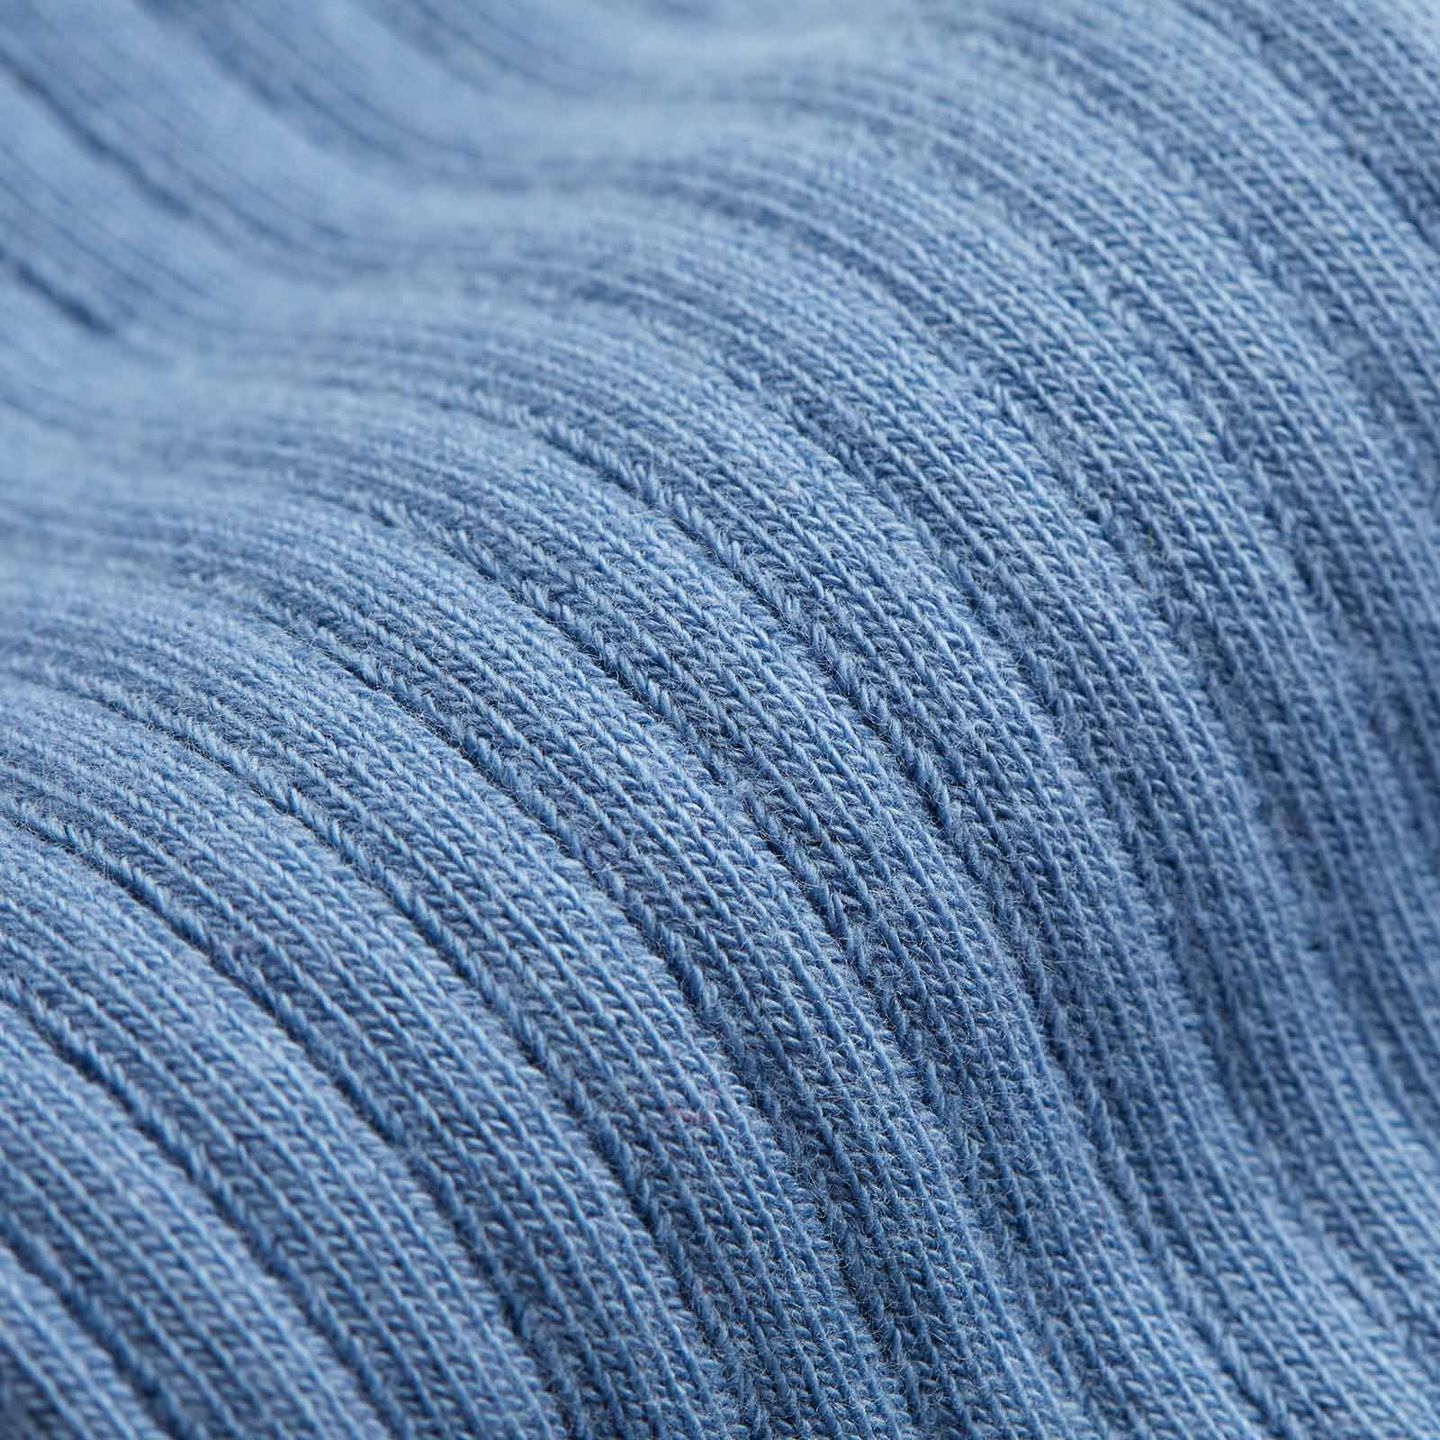 A close up of a blue socks pattern